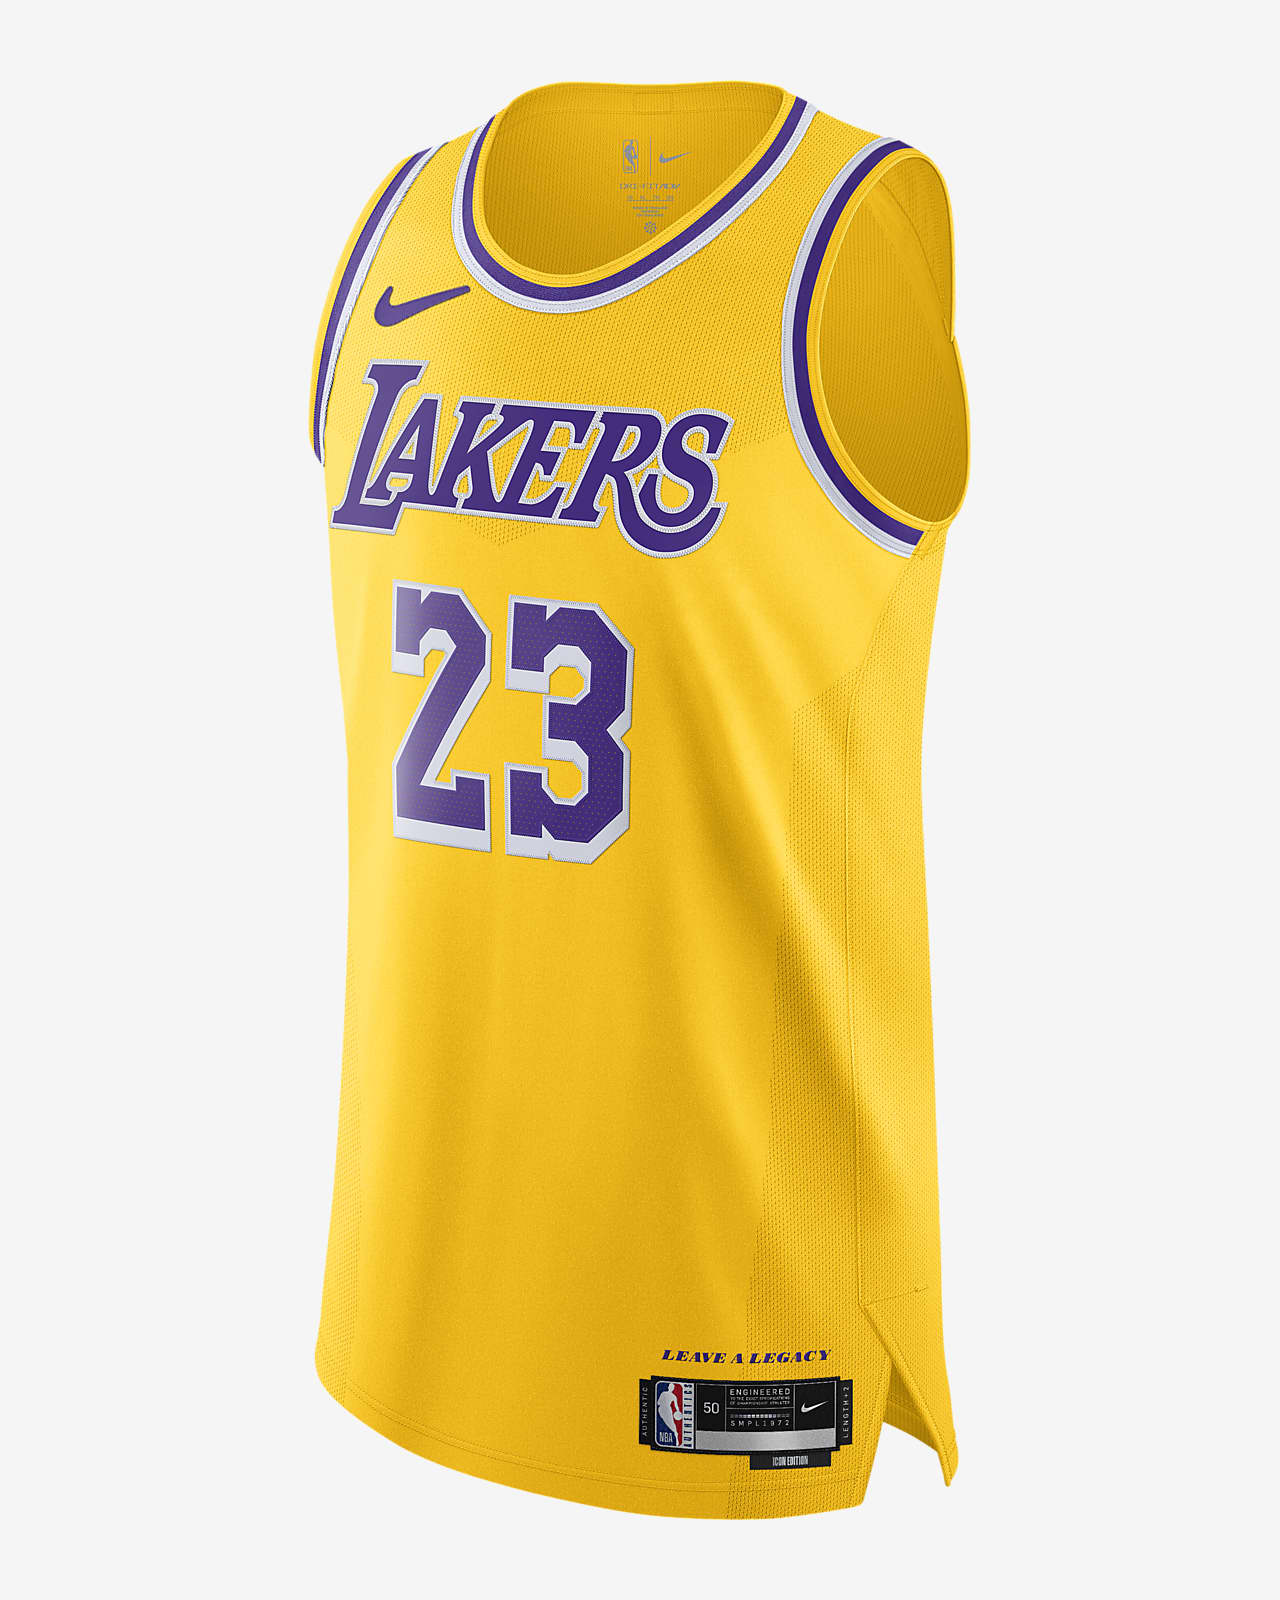 2022/23 赛季洛杉矶湖人队 Icon Edition Nike Dri-FIT ADV NBA Authentic Jersey 男子速干球衣